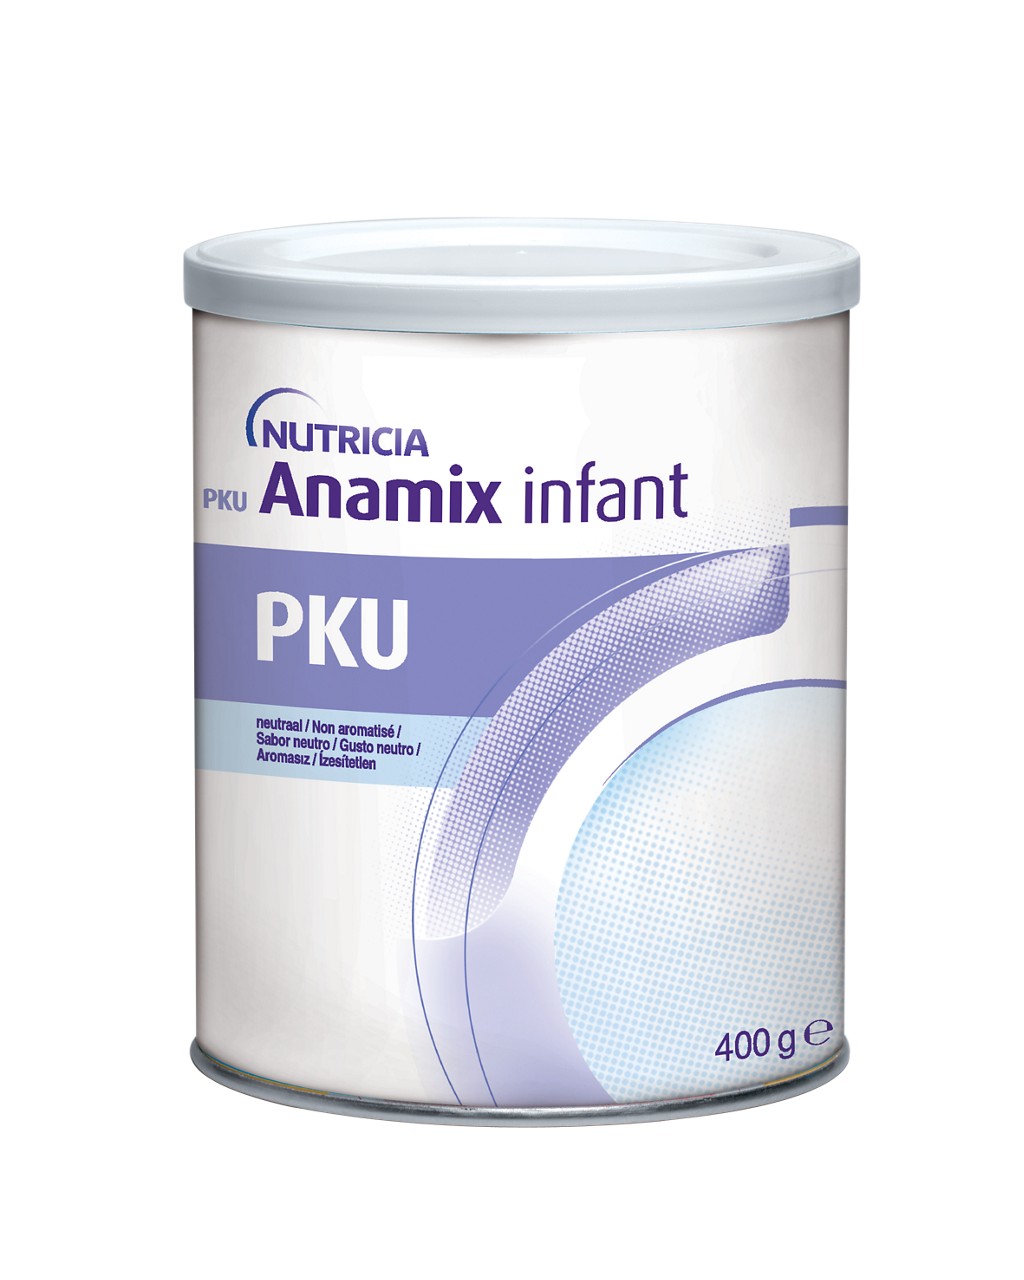 en-GB,PKU Anamix Infant